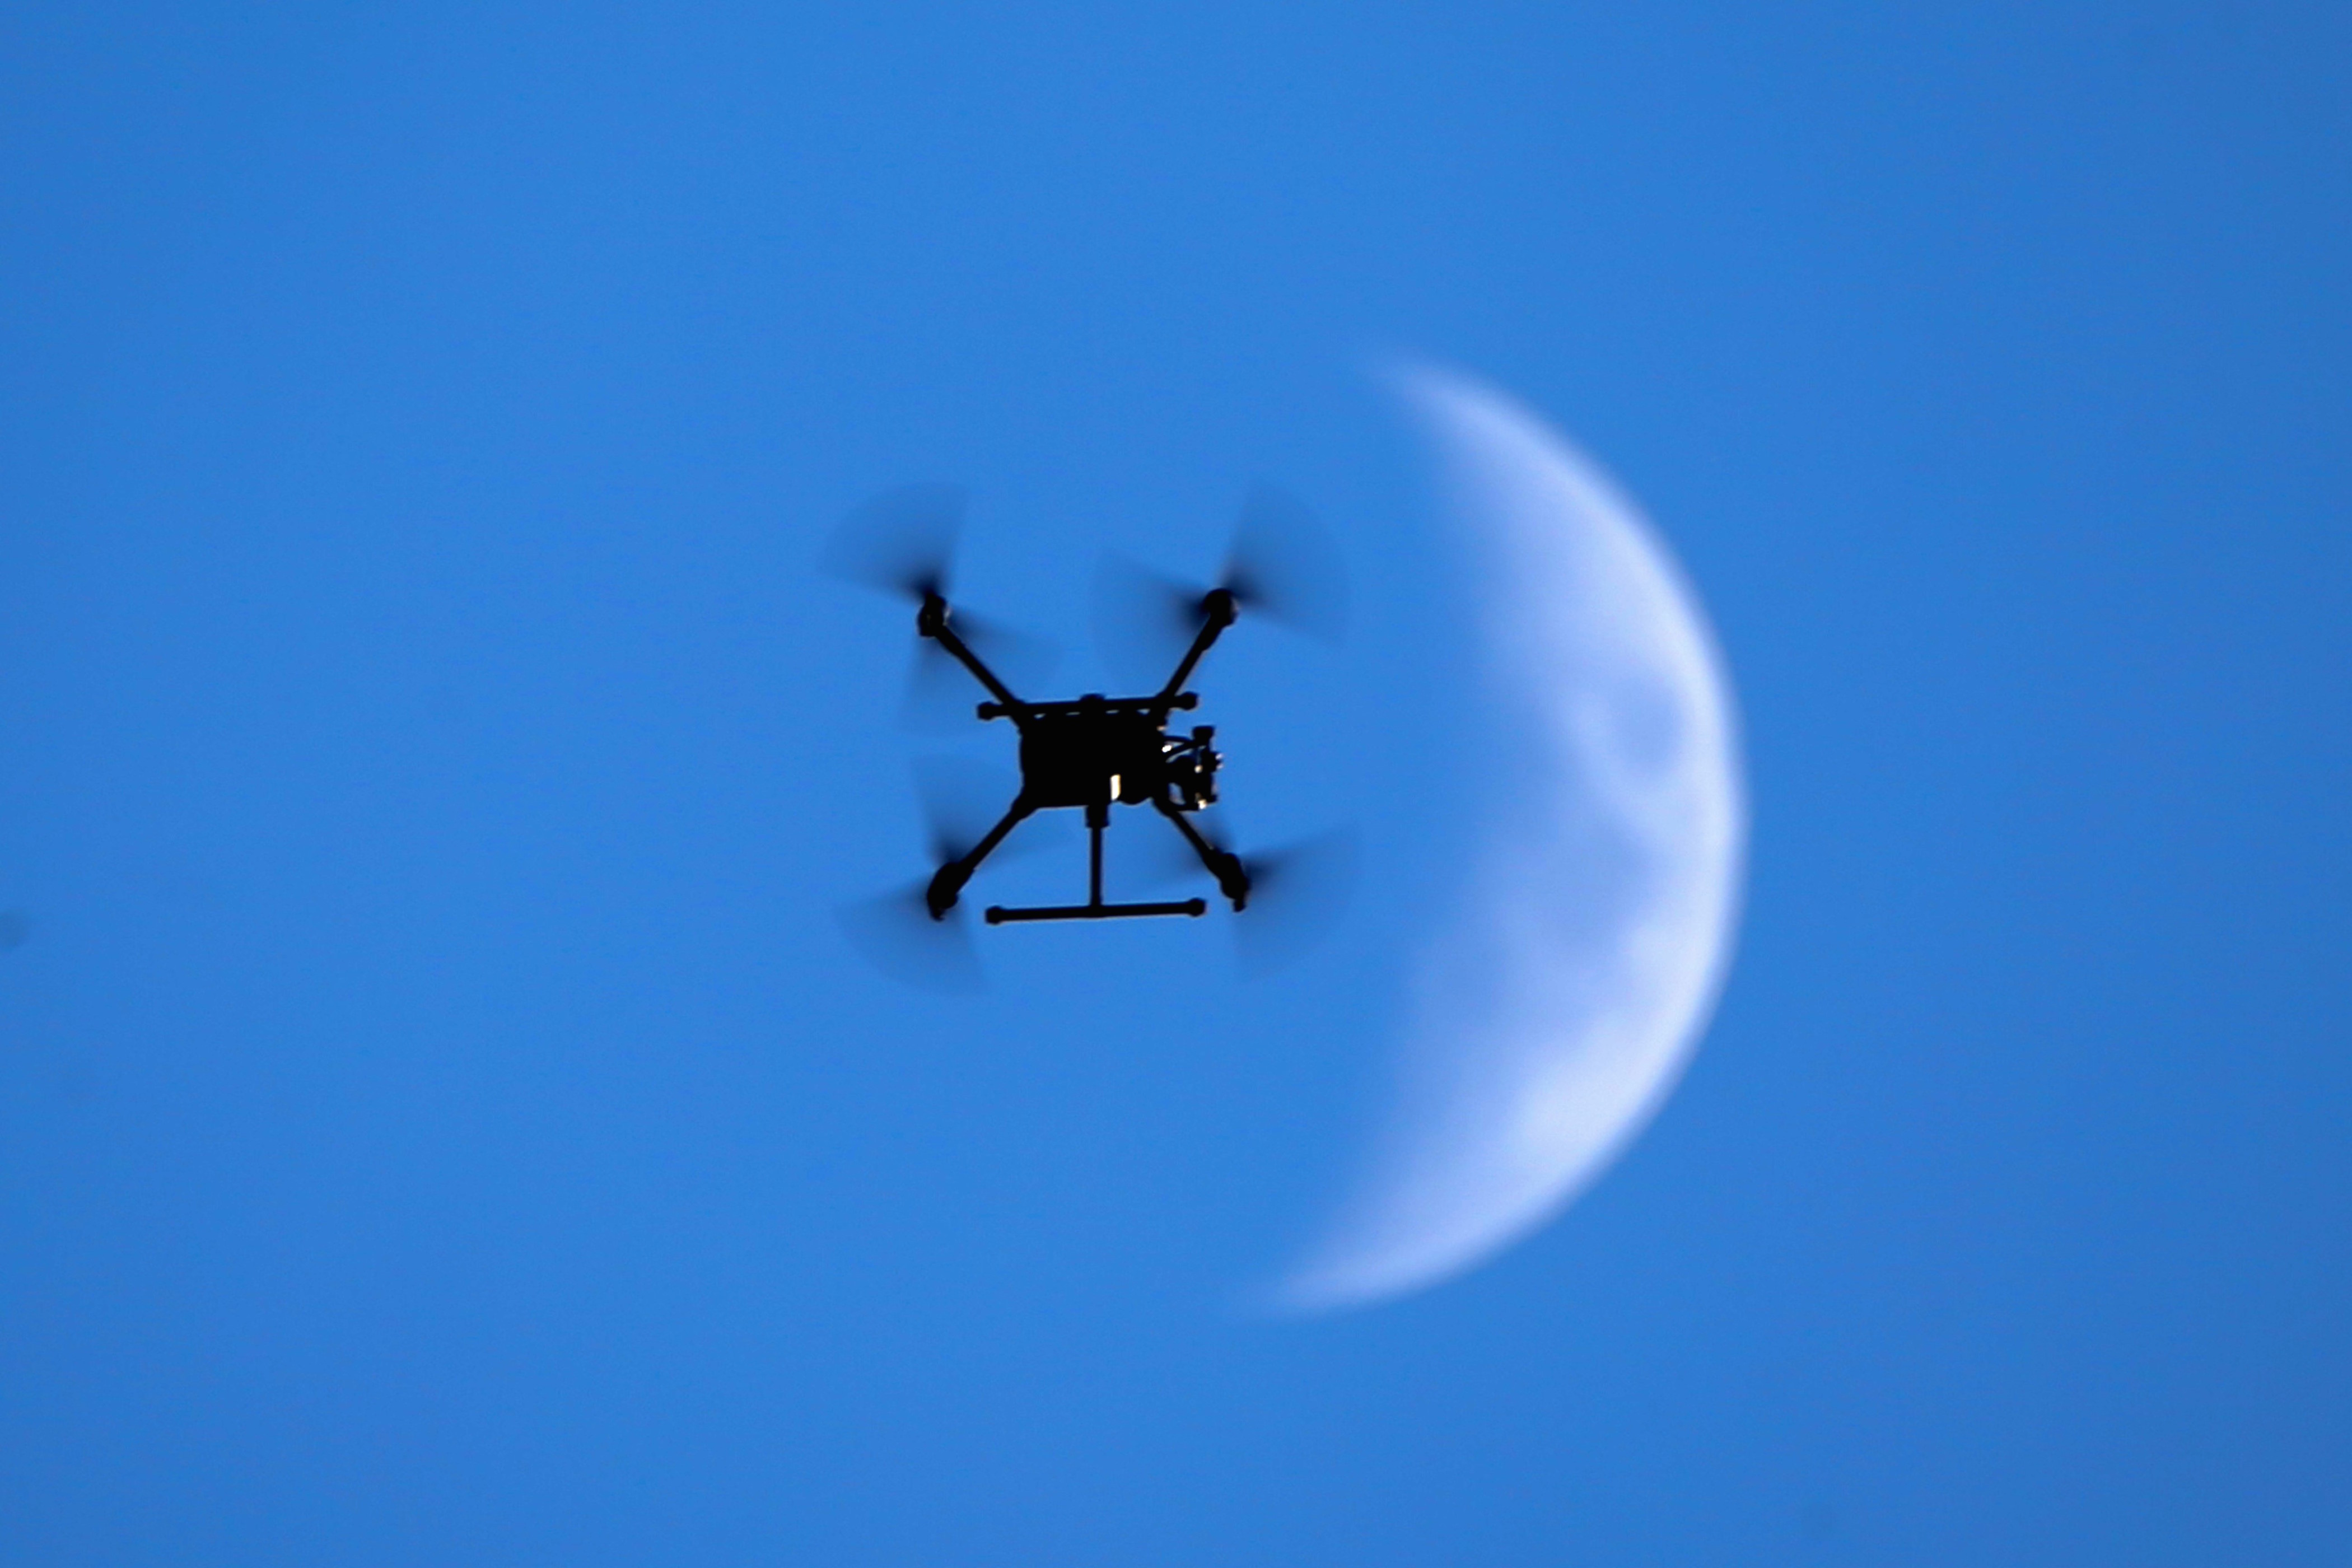 A border patrol drone flies past the moon over Turkey-Iraq border in Semdinli district of Hakkari,Turkey on May 21, 2018. (Photo by Ozkan Bilgin/Anadolu Agency/Getty Images)